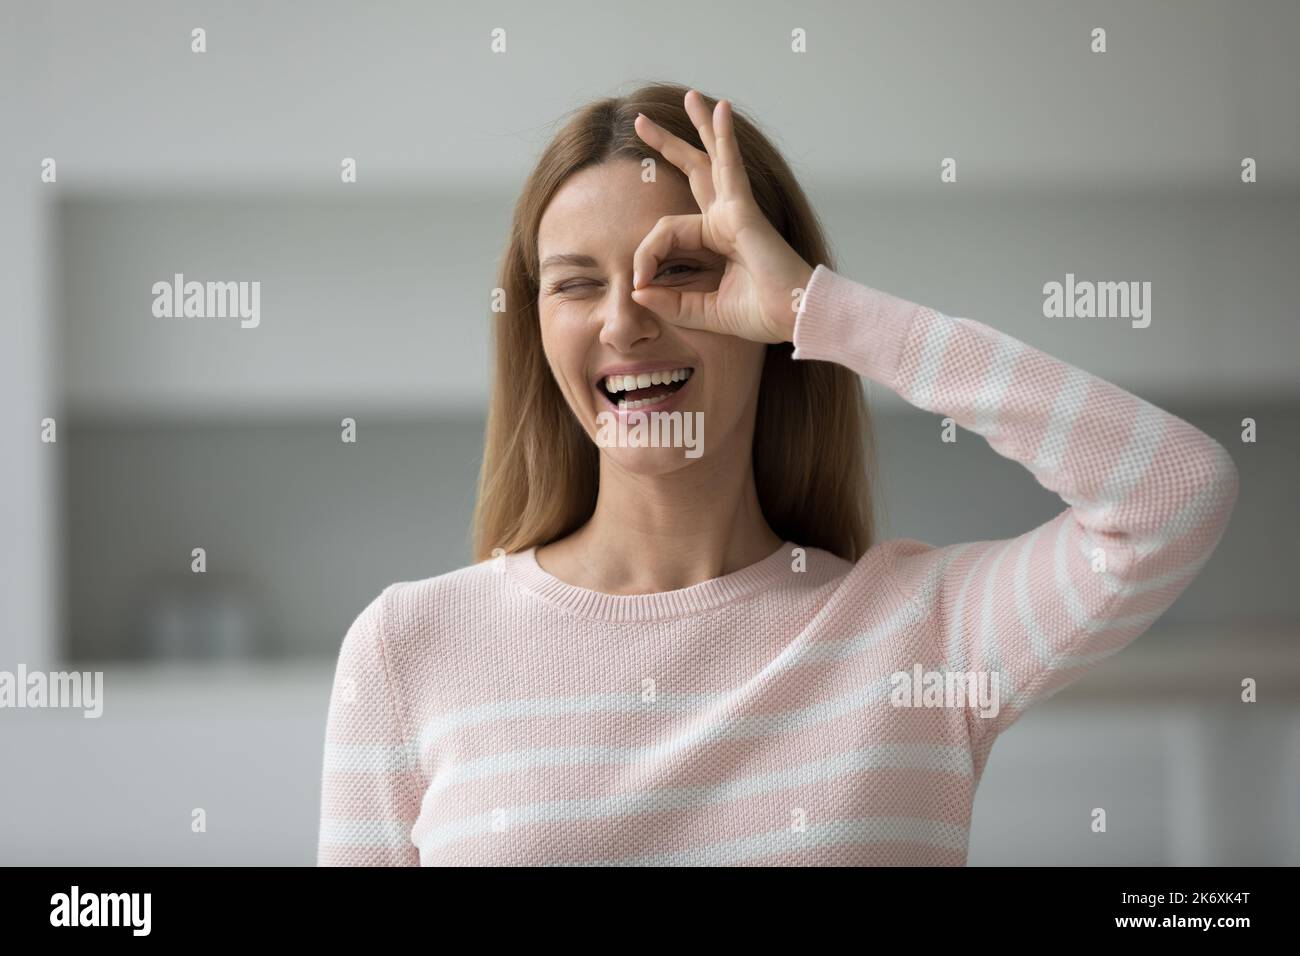 Head shot portrait smiling woman showing binocular shape with fingers Stock Photo